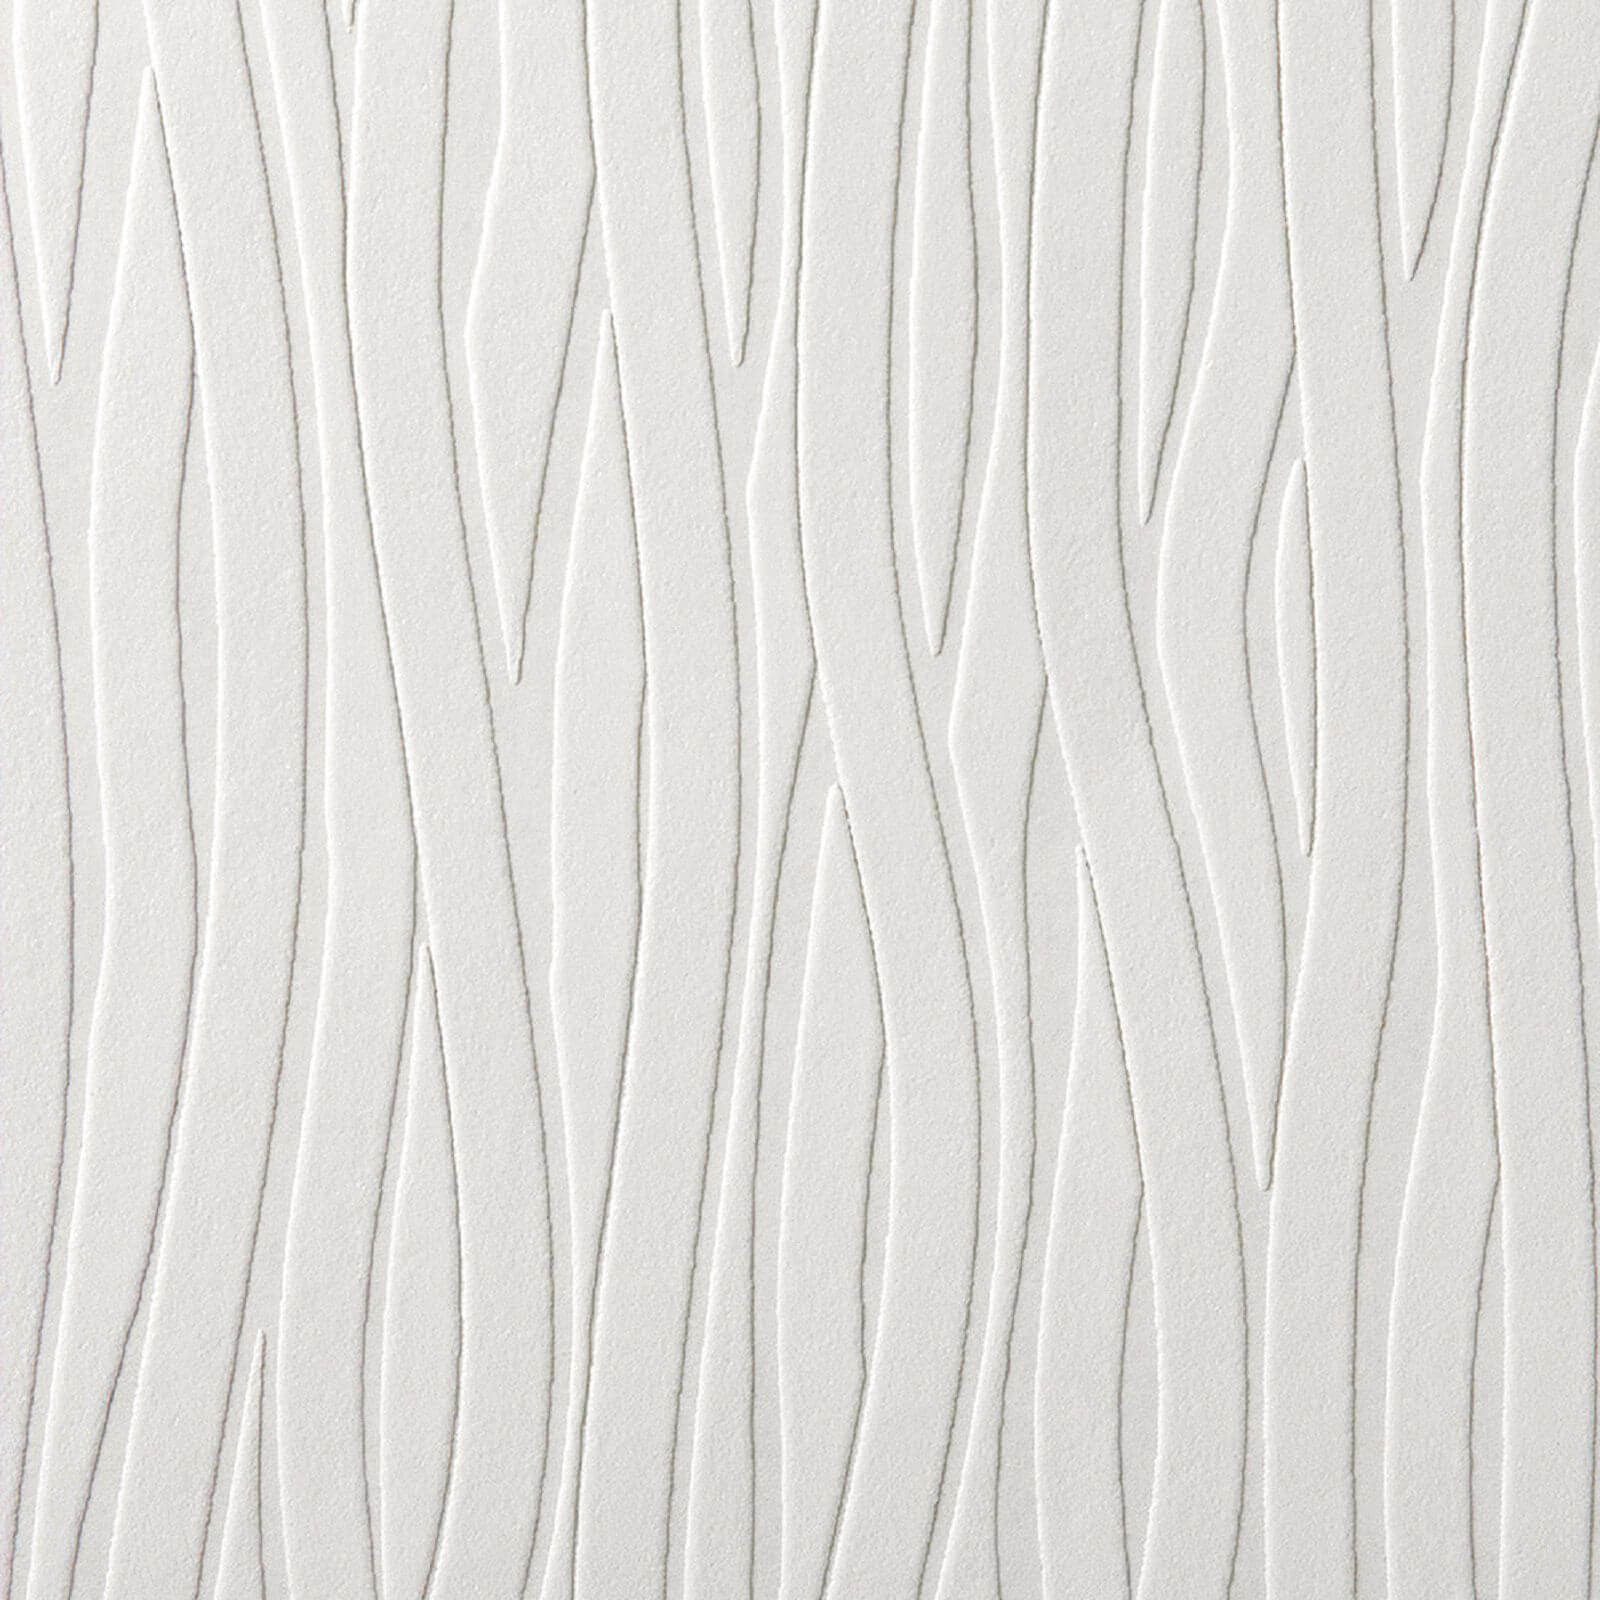 Superfresco Wavy Lines Wallpaper - White